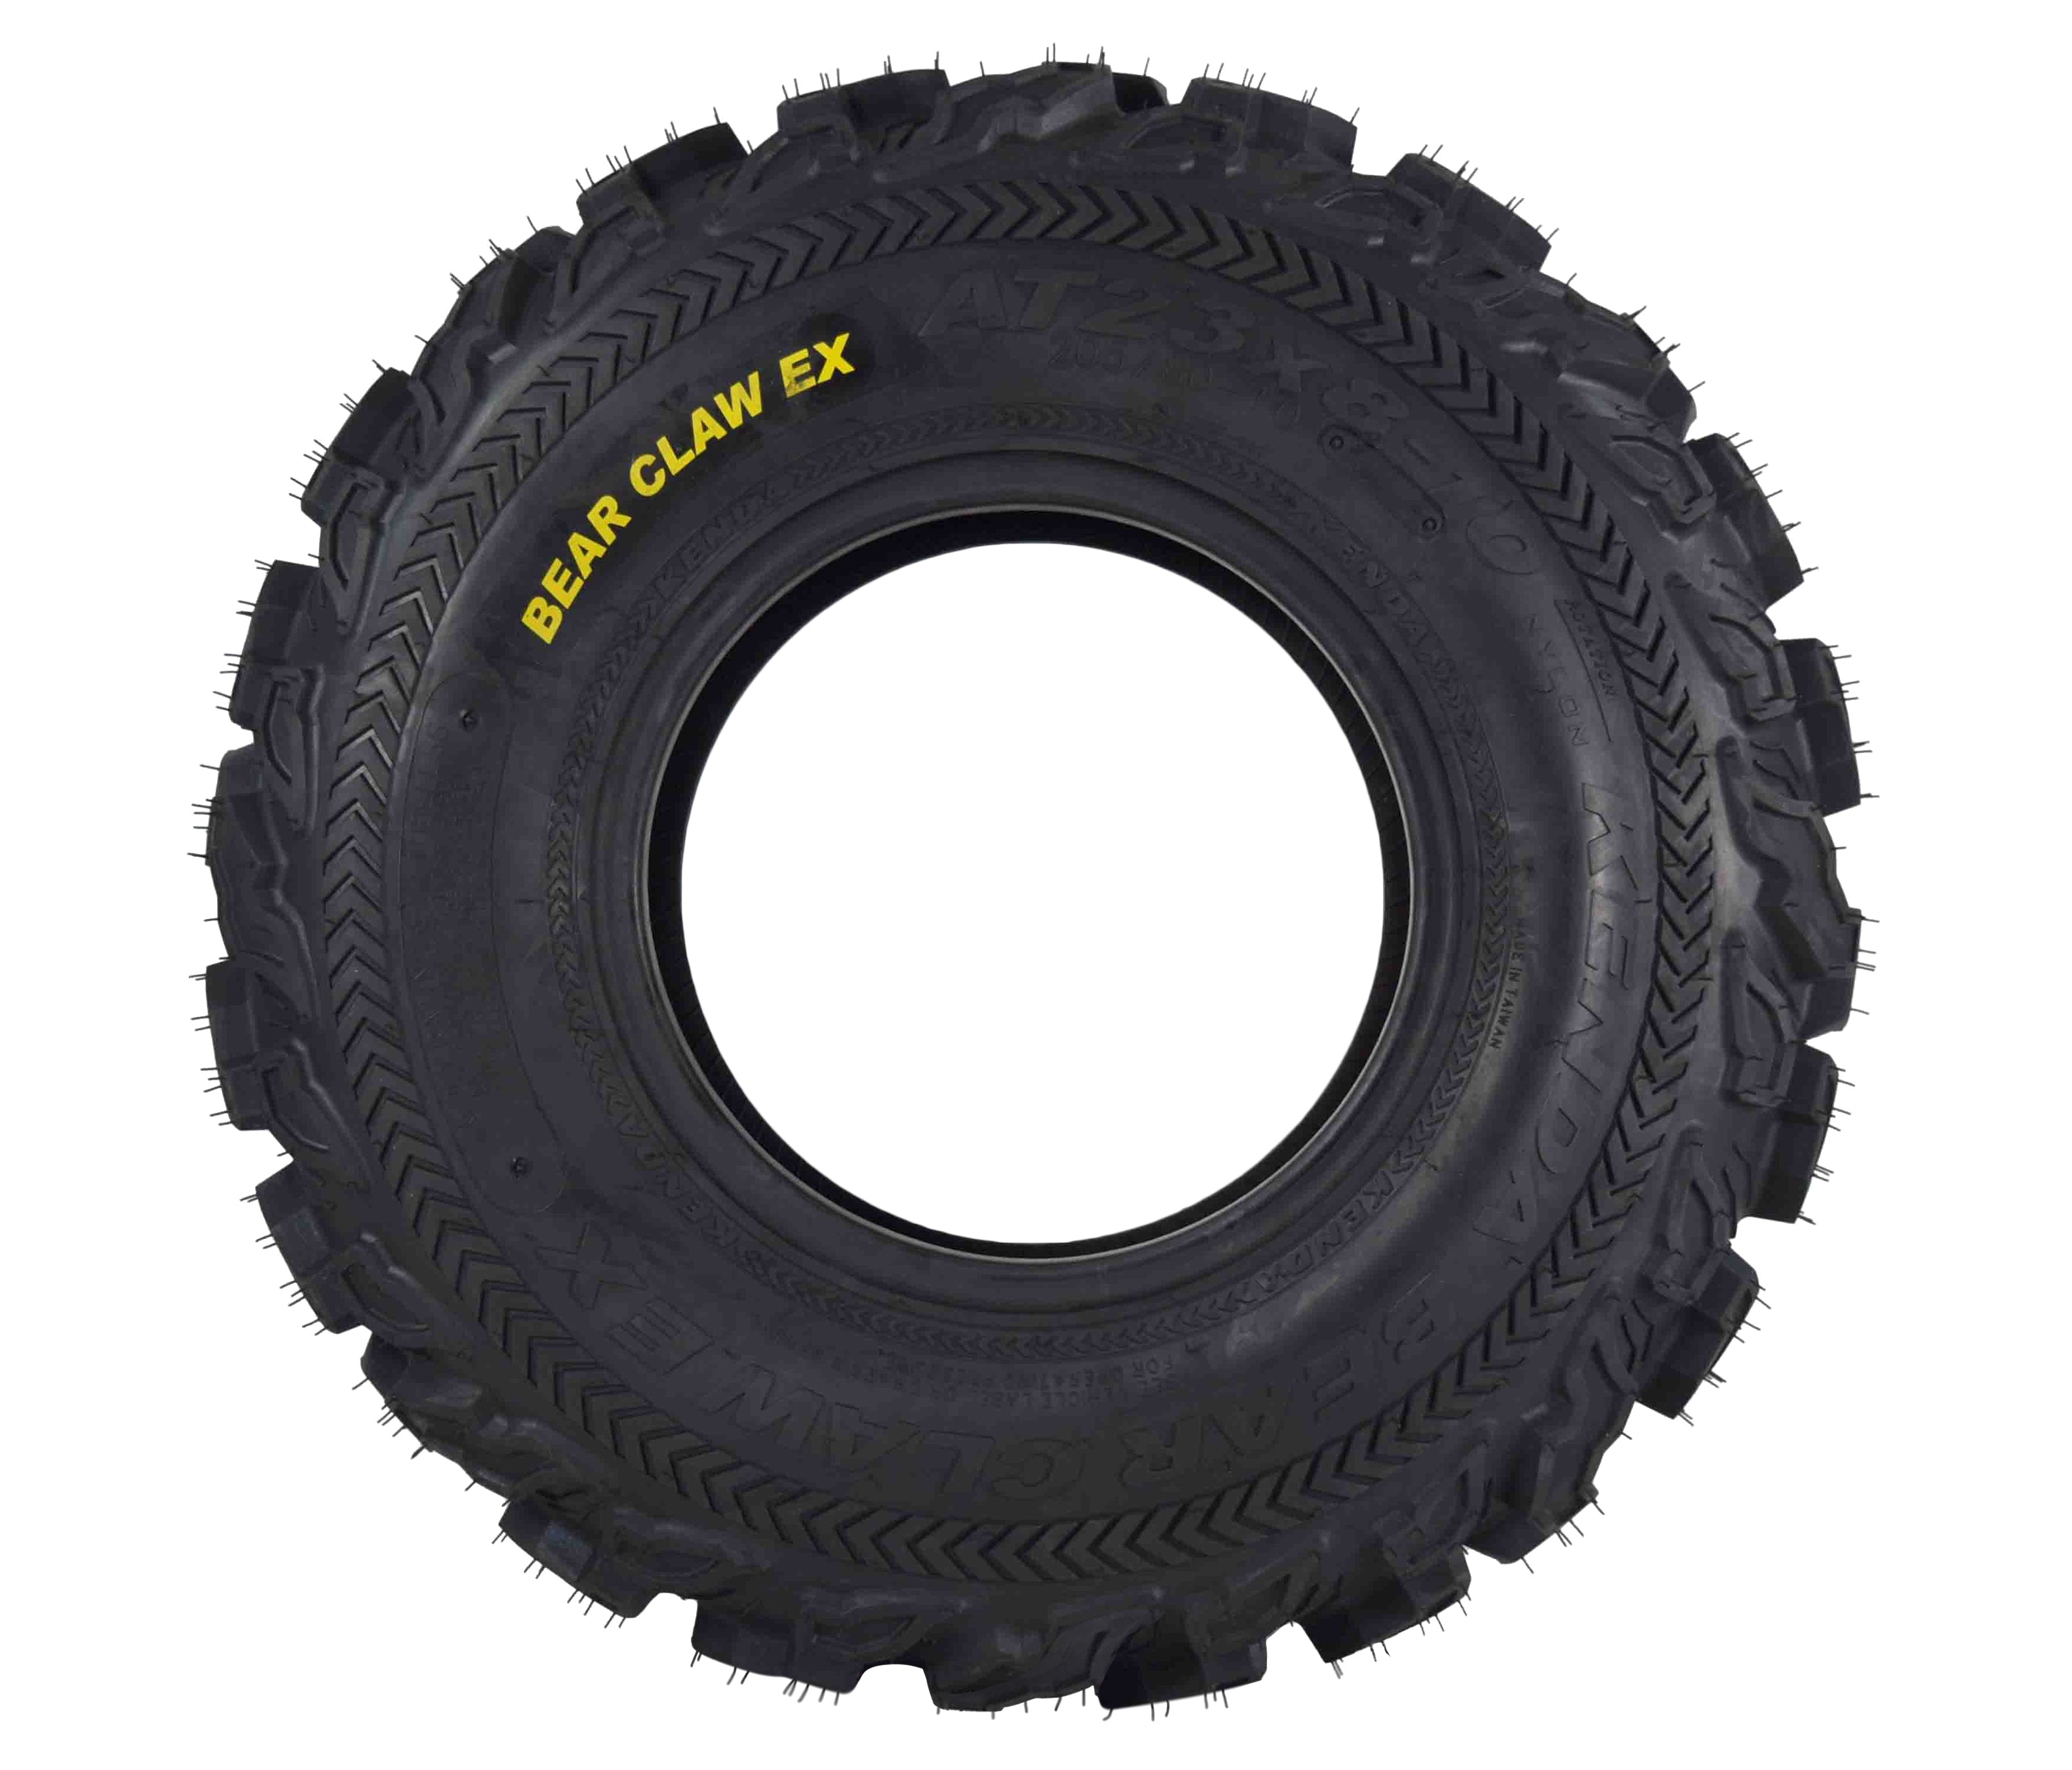 Kenda Bear Claw EX 23x8-10 Front ATV 6 PLY Tire Bearclaw 23x8x10 Single Tire